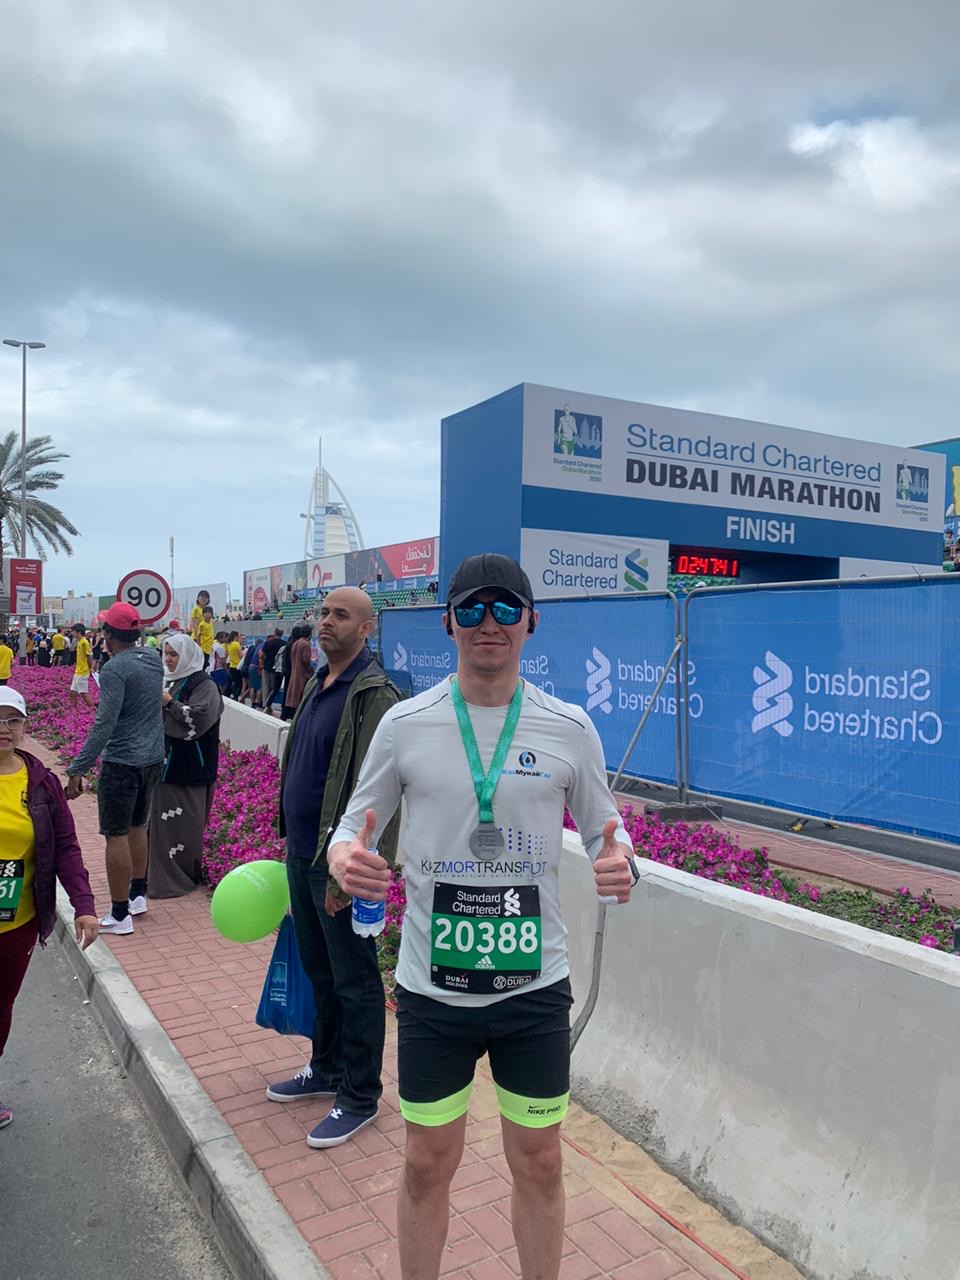 Kazmortransflot employee ran a full Dubai marathon